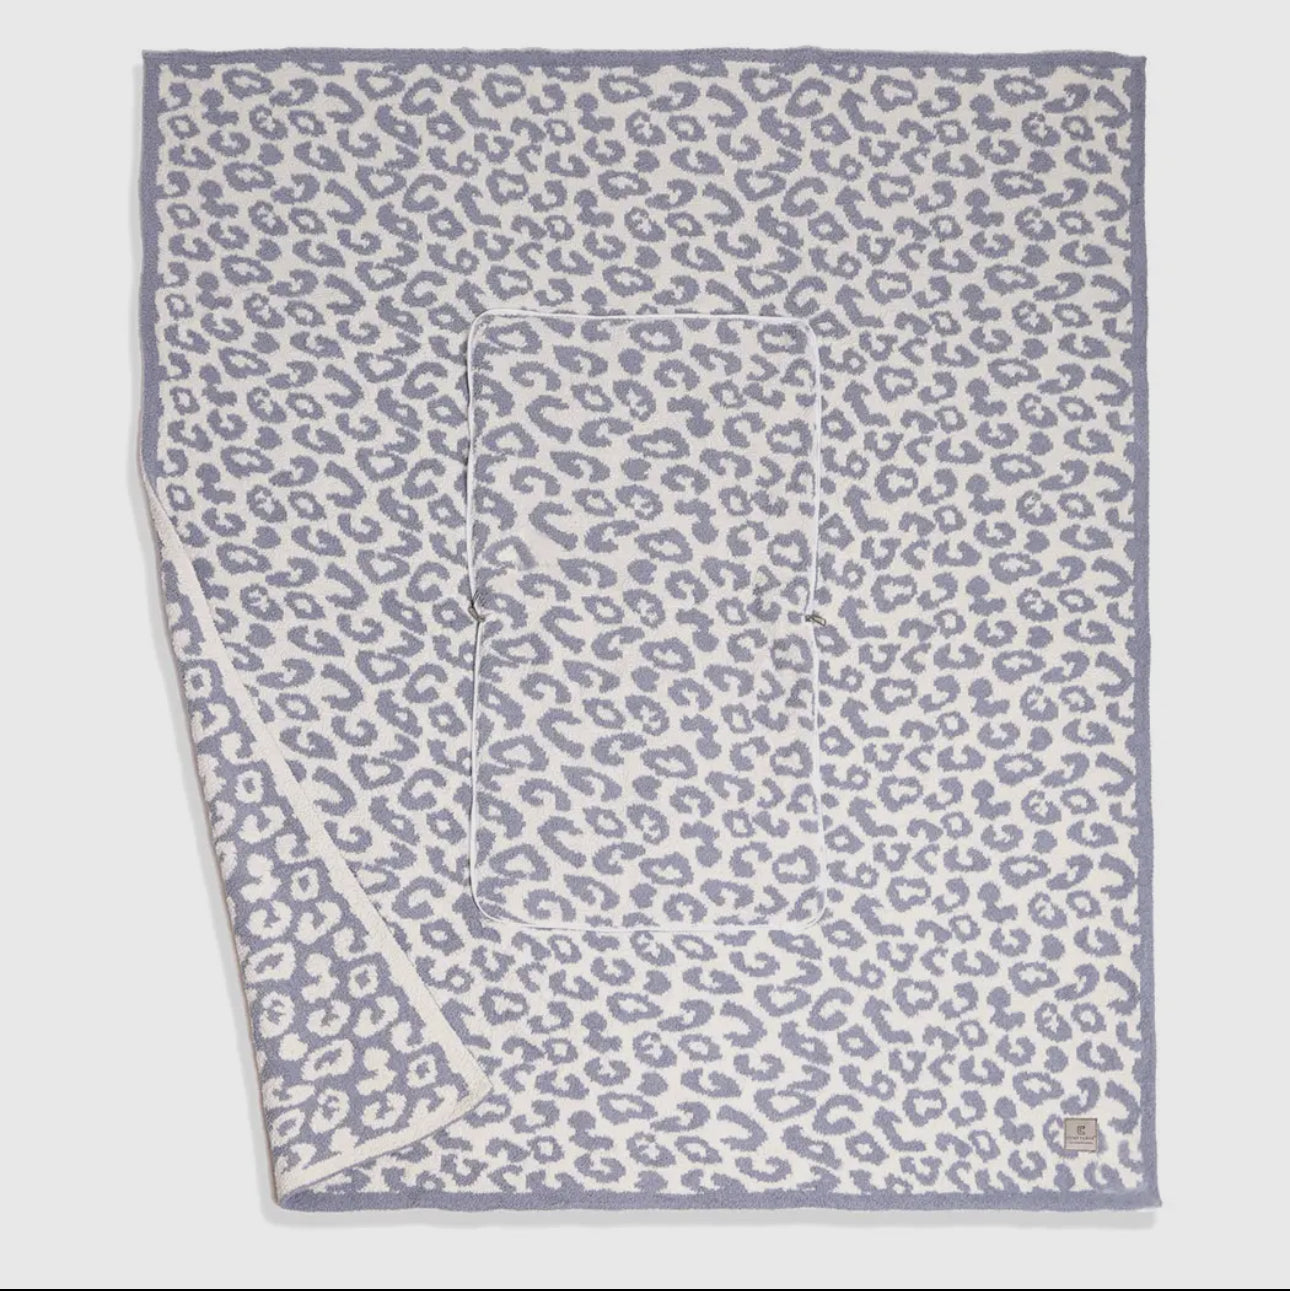 Logan Leopard Blanket Pillow